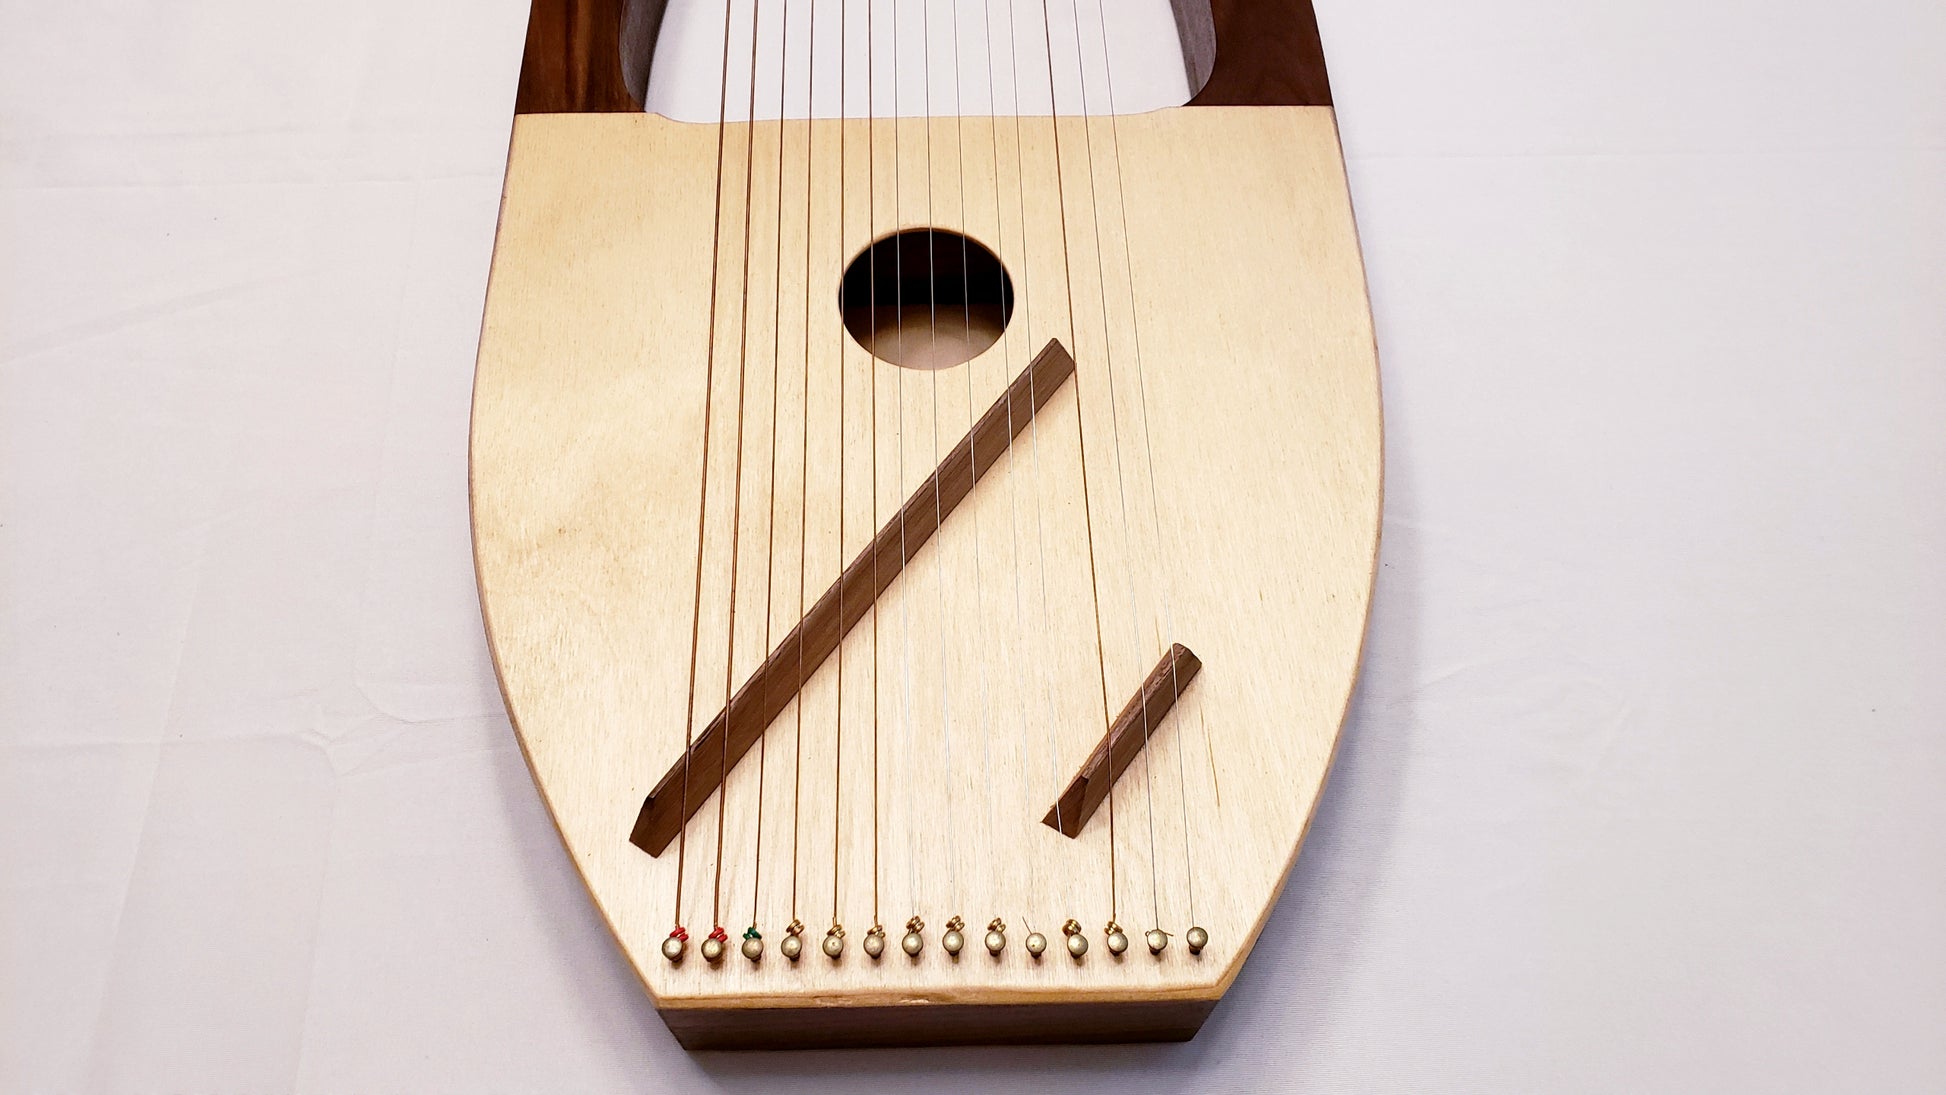 David's Harp 14 Stringed: View of Strings